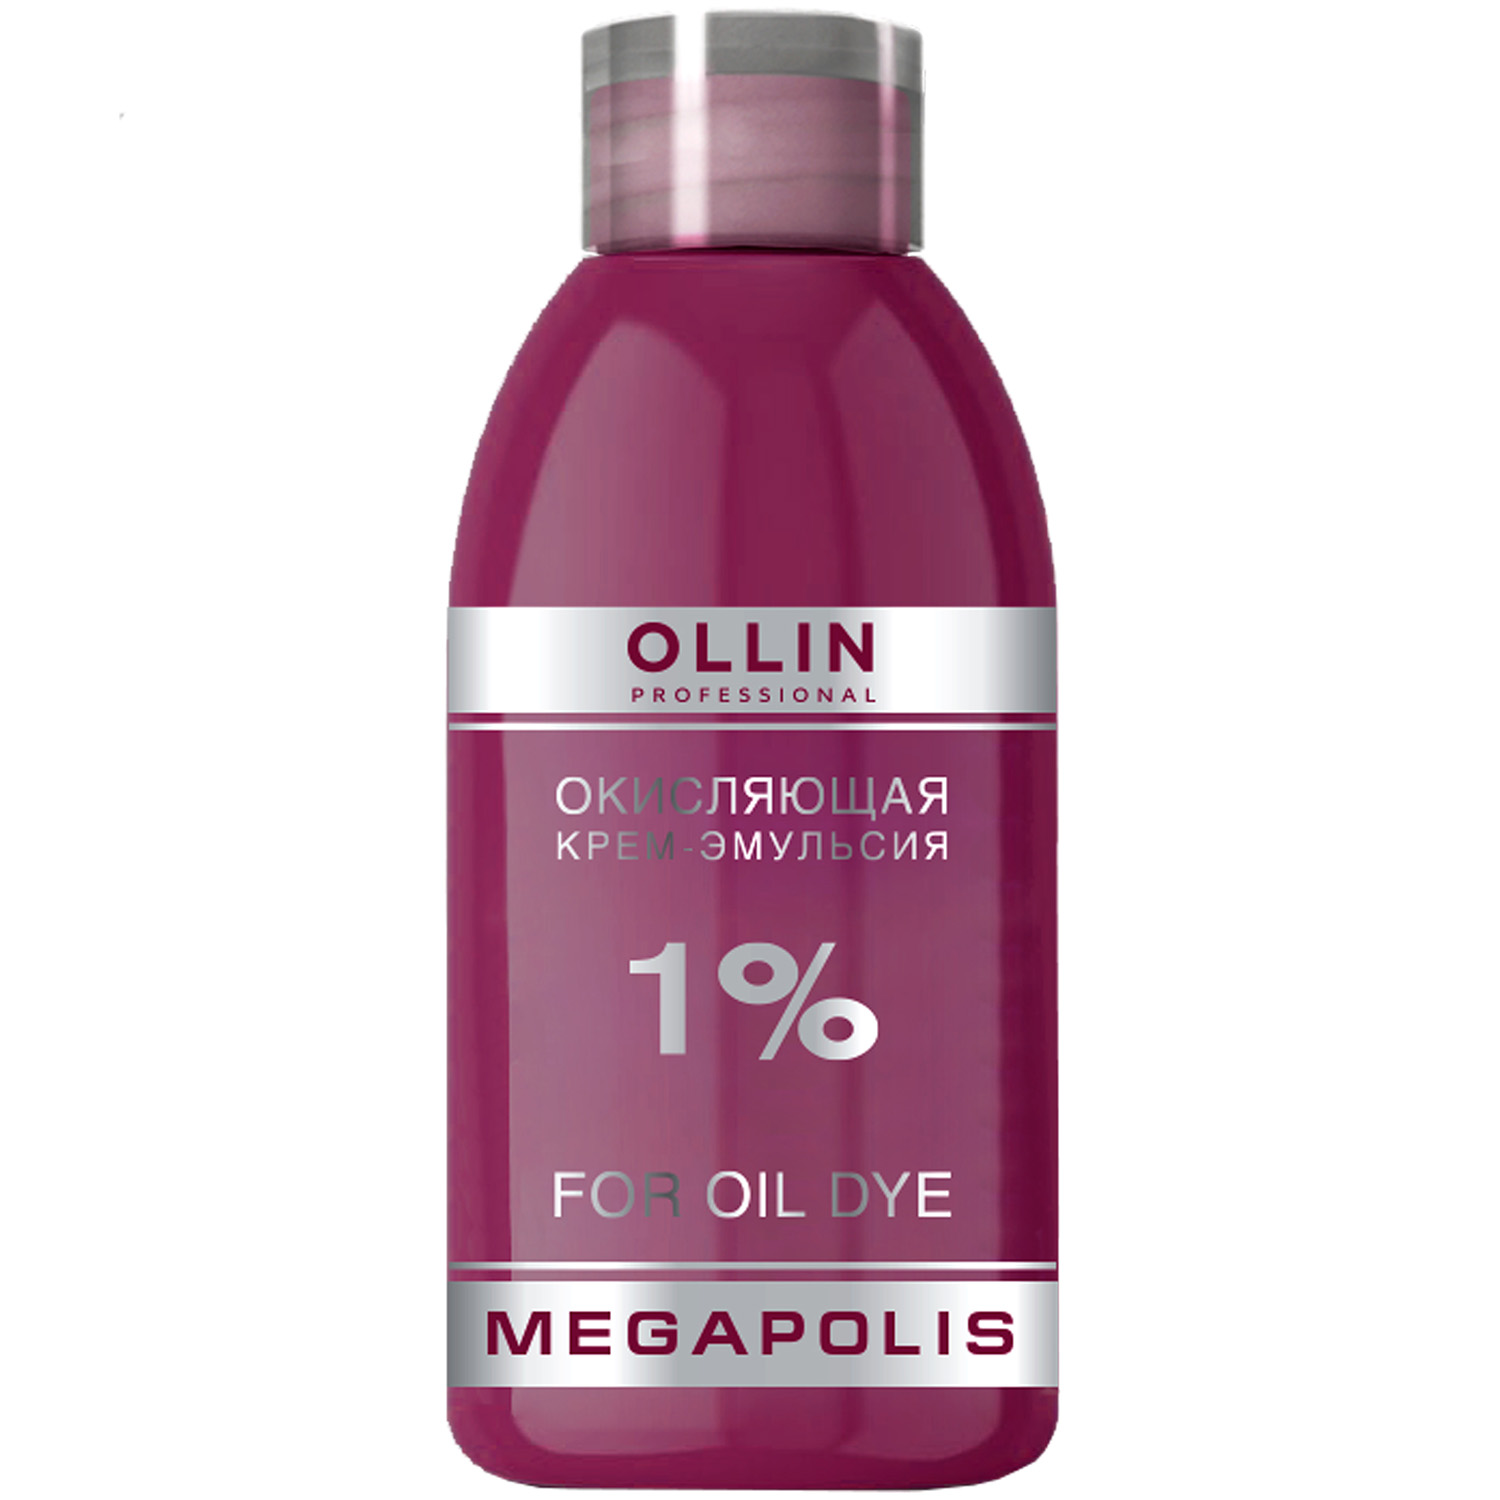 Ollin Professional Окисляющая крем-эмульсия 1%, 75 мл (Ollin Professional, Megapolis) окисляющая крем эмульсия ollin megapolis 1% 75 мл